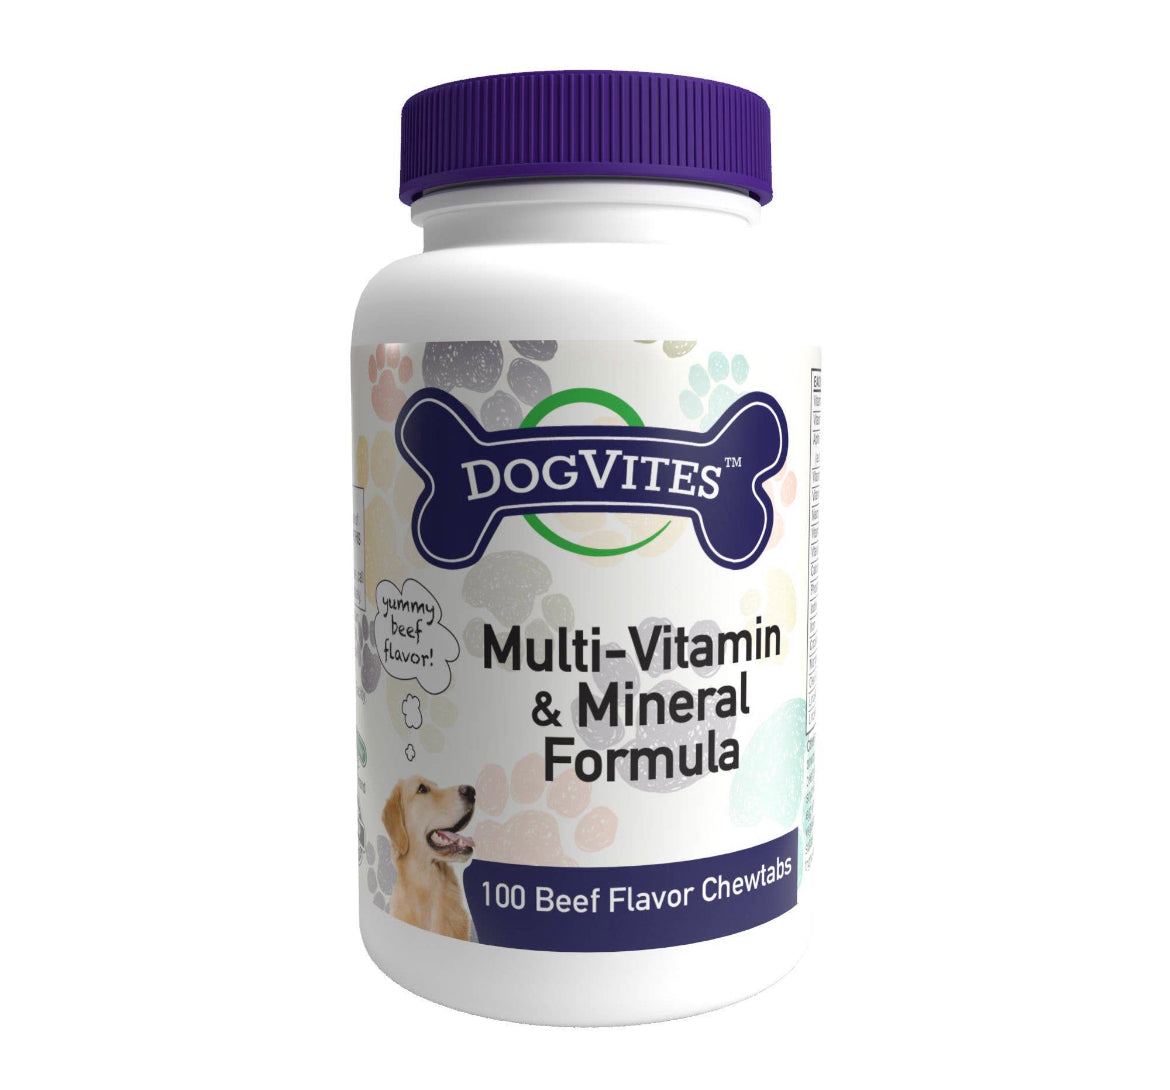 Dog vites multi-vitamin